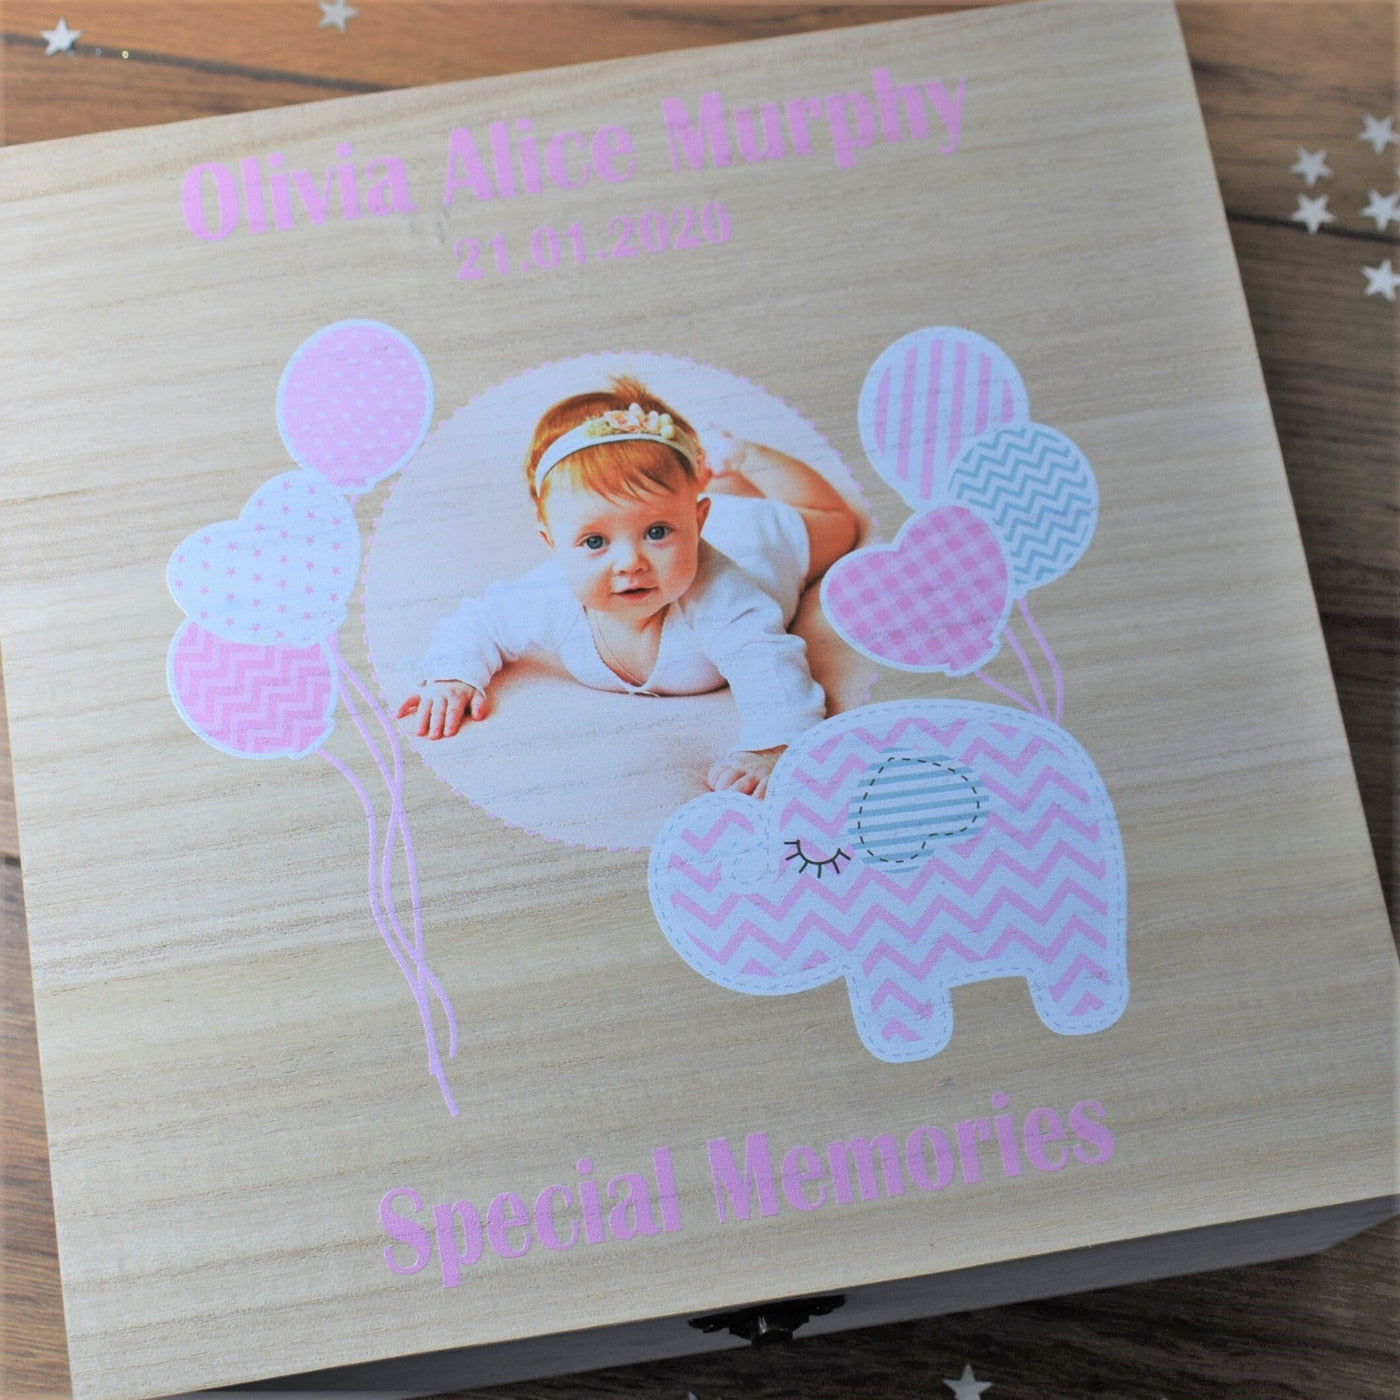 Personalised, Photo Printed Wooden Keepsake Box - New Baby Girl & Pink Elephant